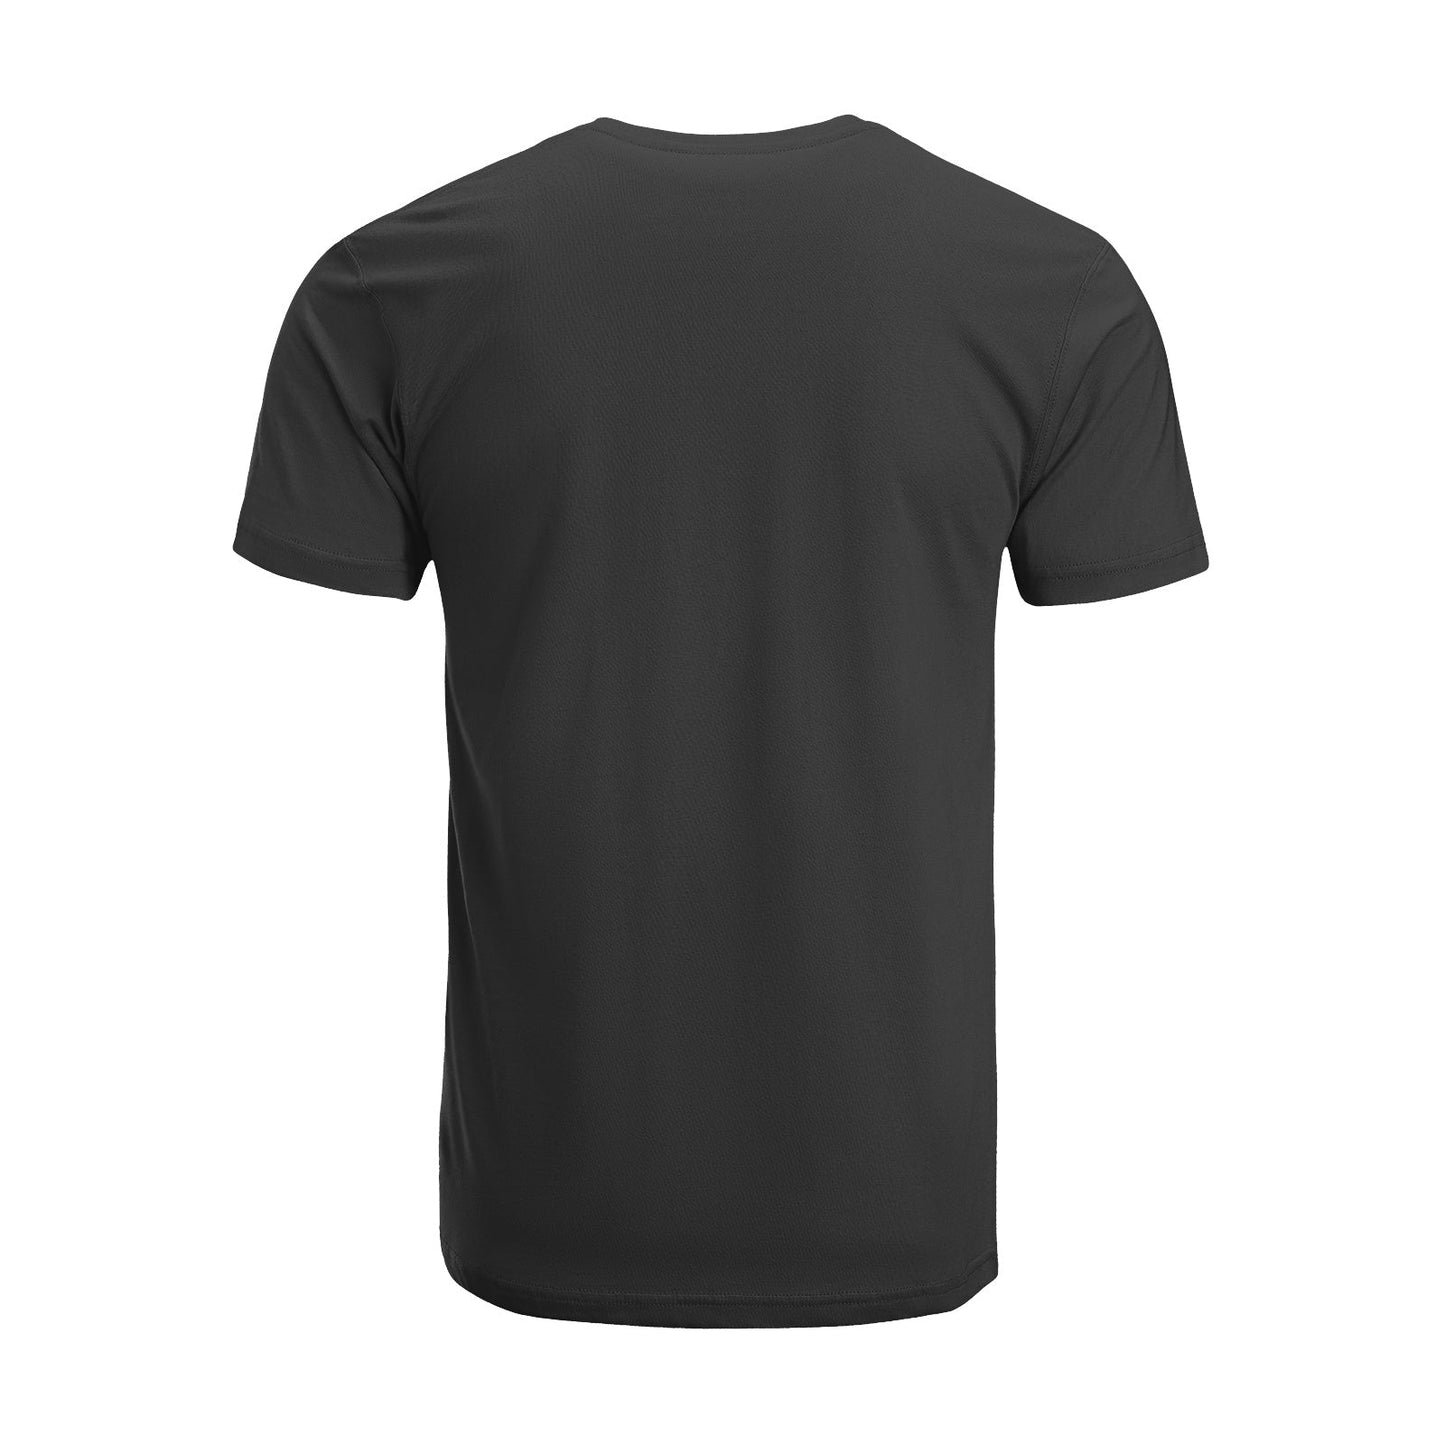 Unisex Short Sleeve Crew Neck Cotton Jersey T-Shirt MOM 02